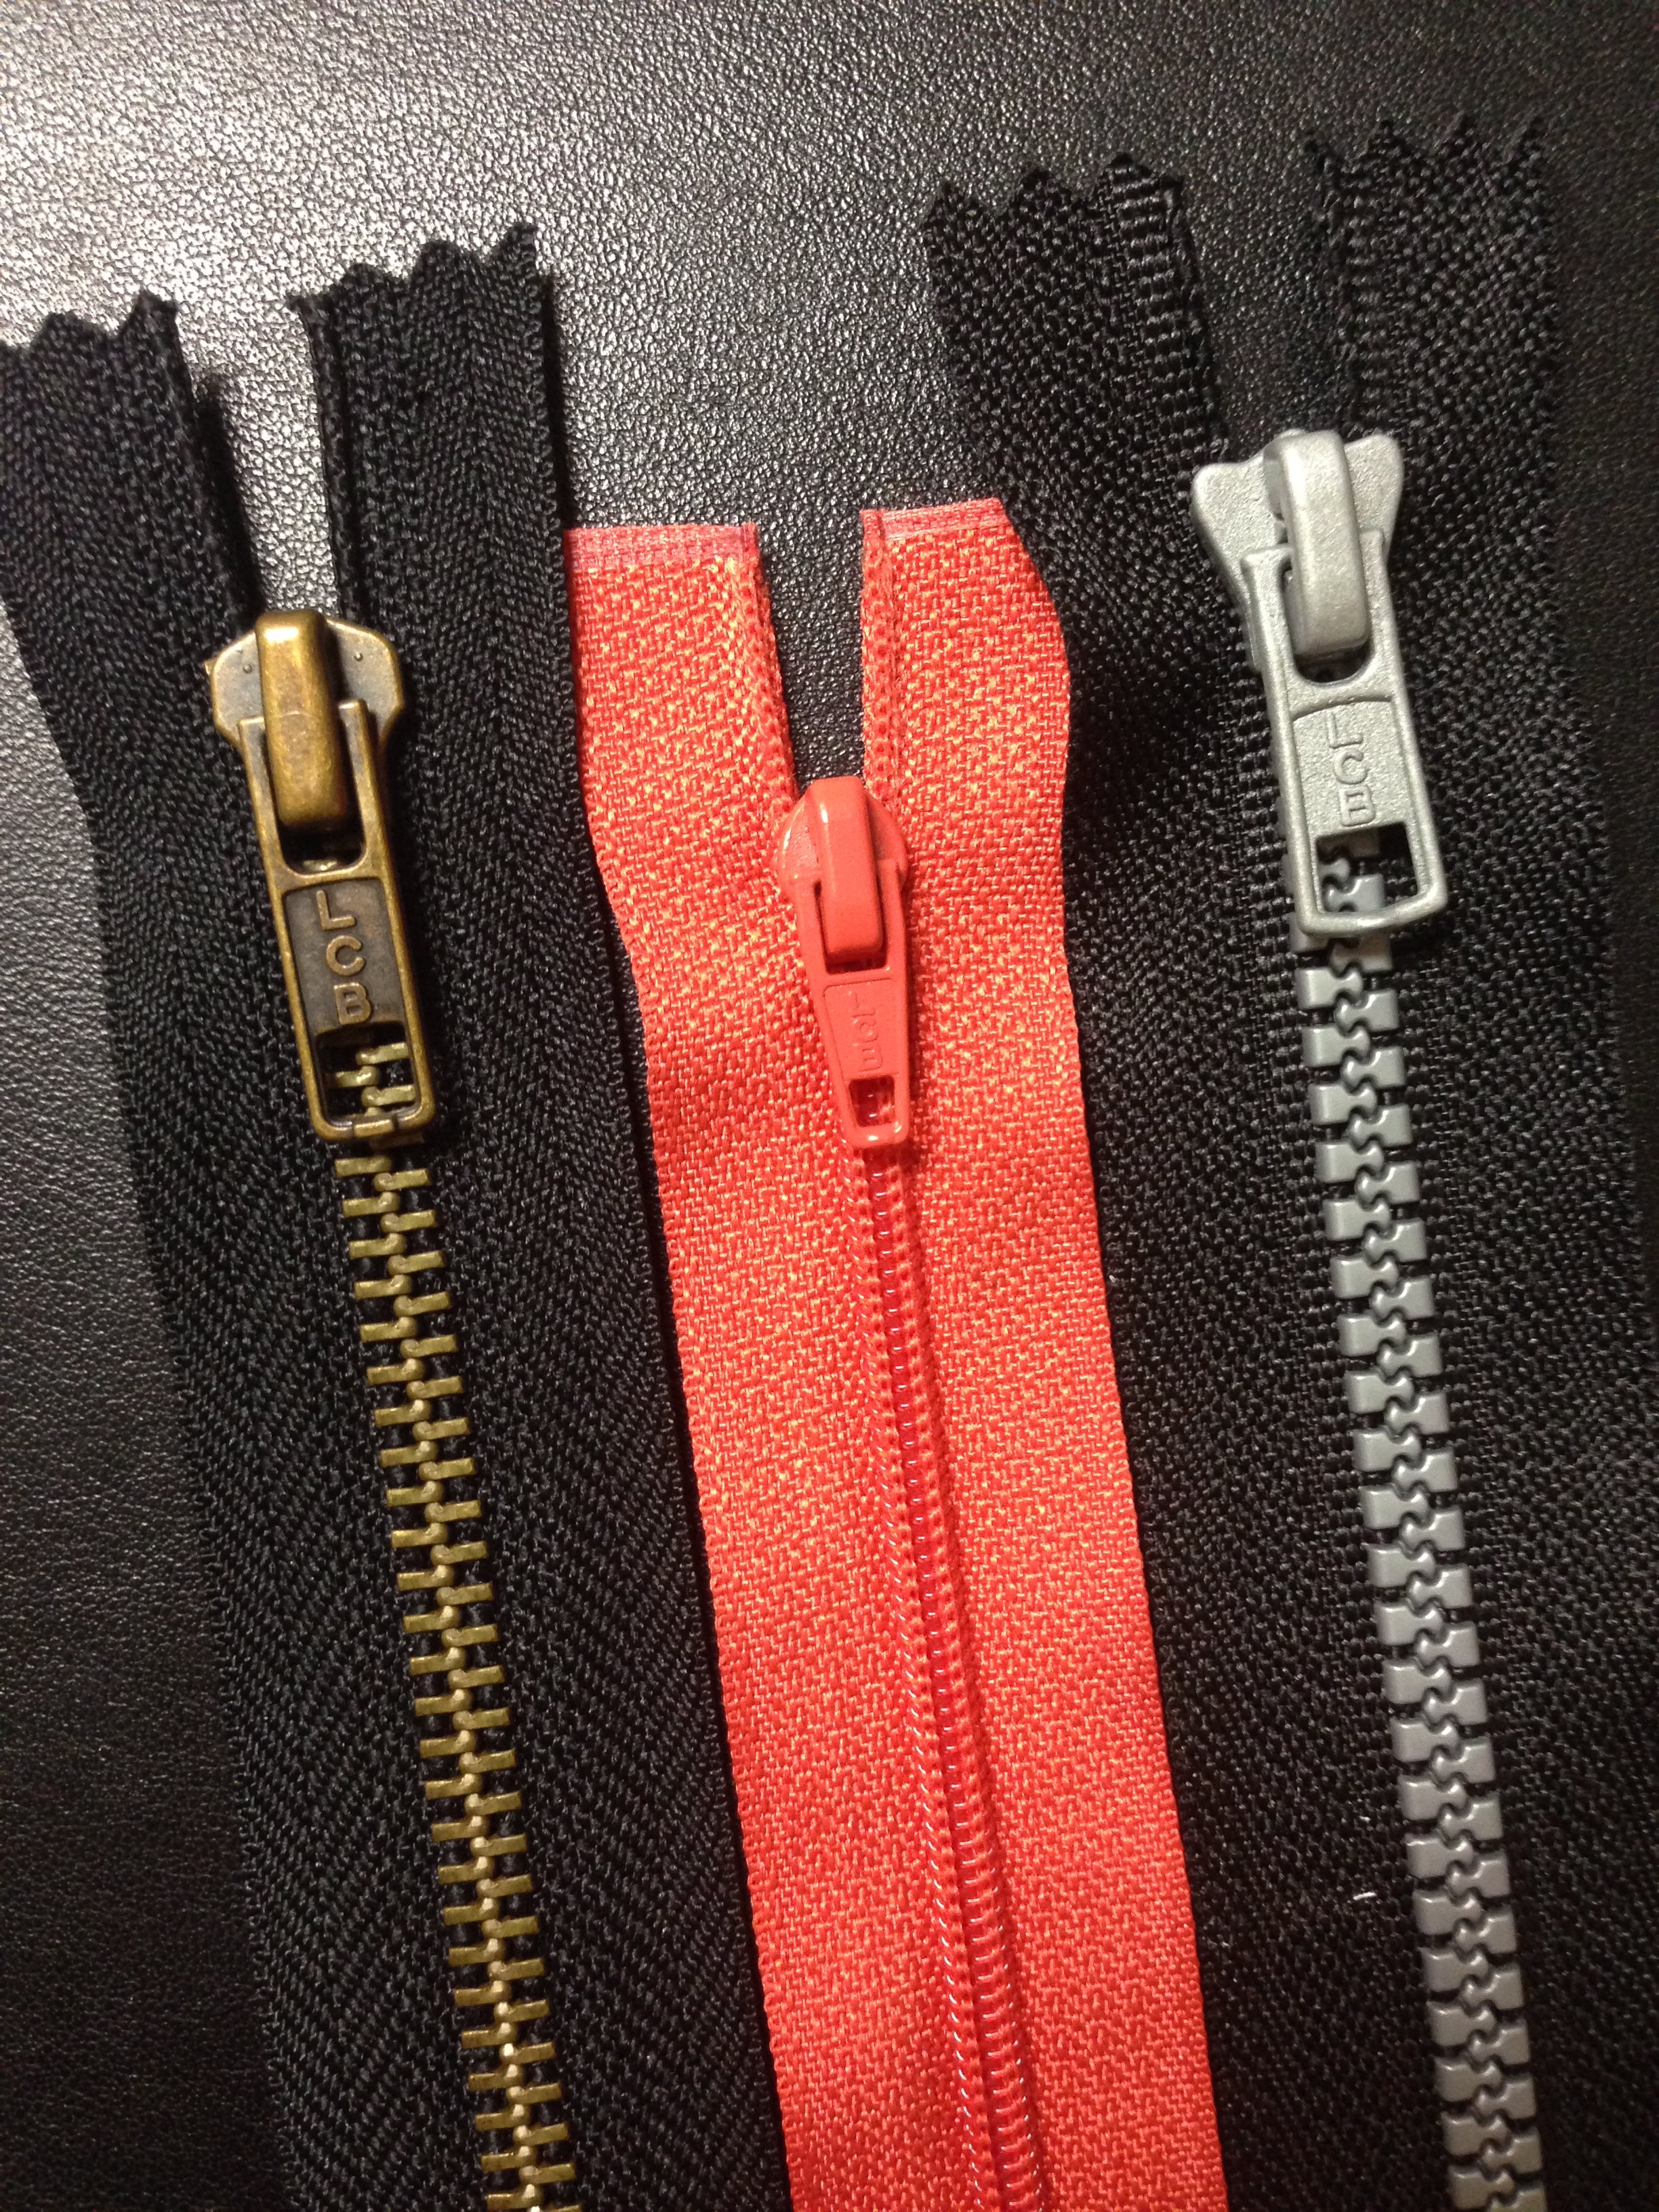 A graphic of a zipper partially unzipped.